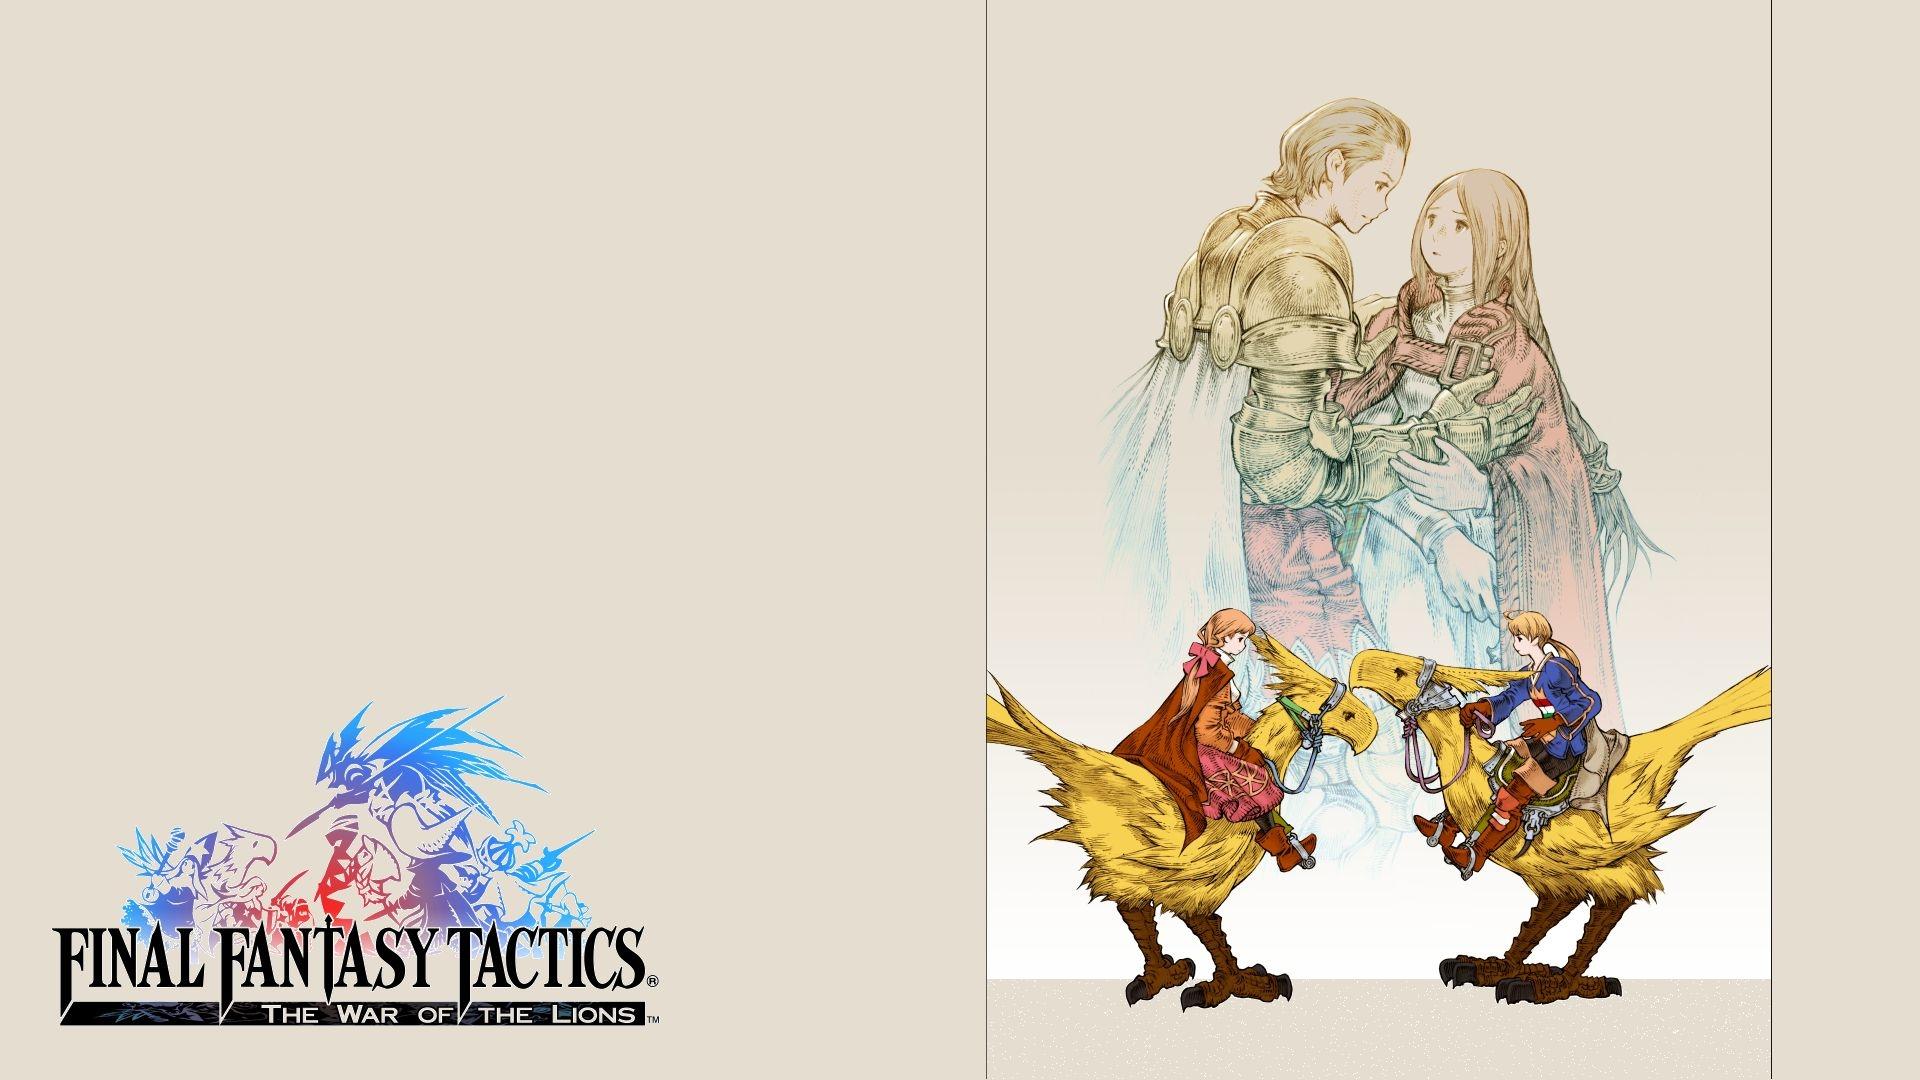 Final Fantasy Tactics at 1024 x 1024 iPad size wallpapers HD quality